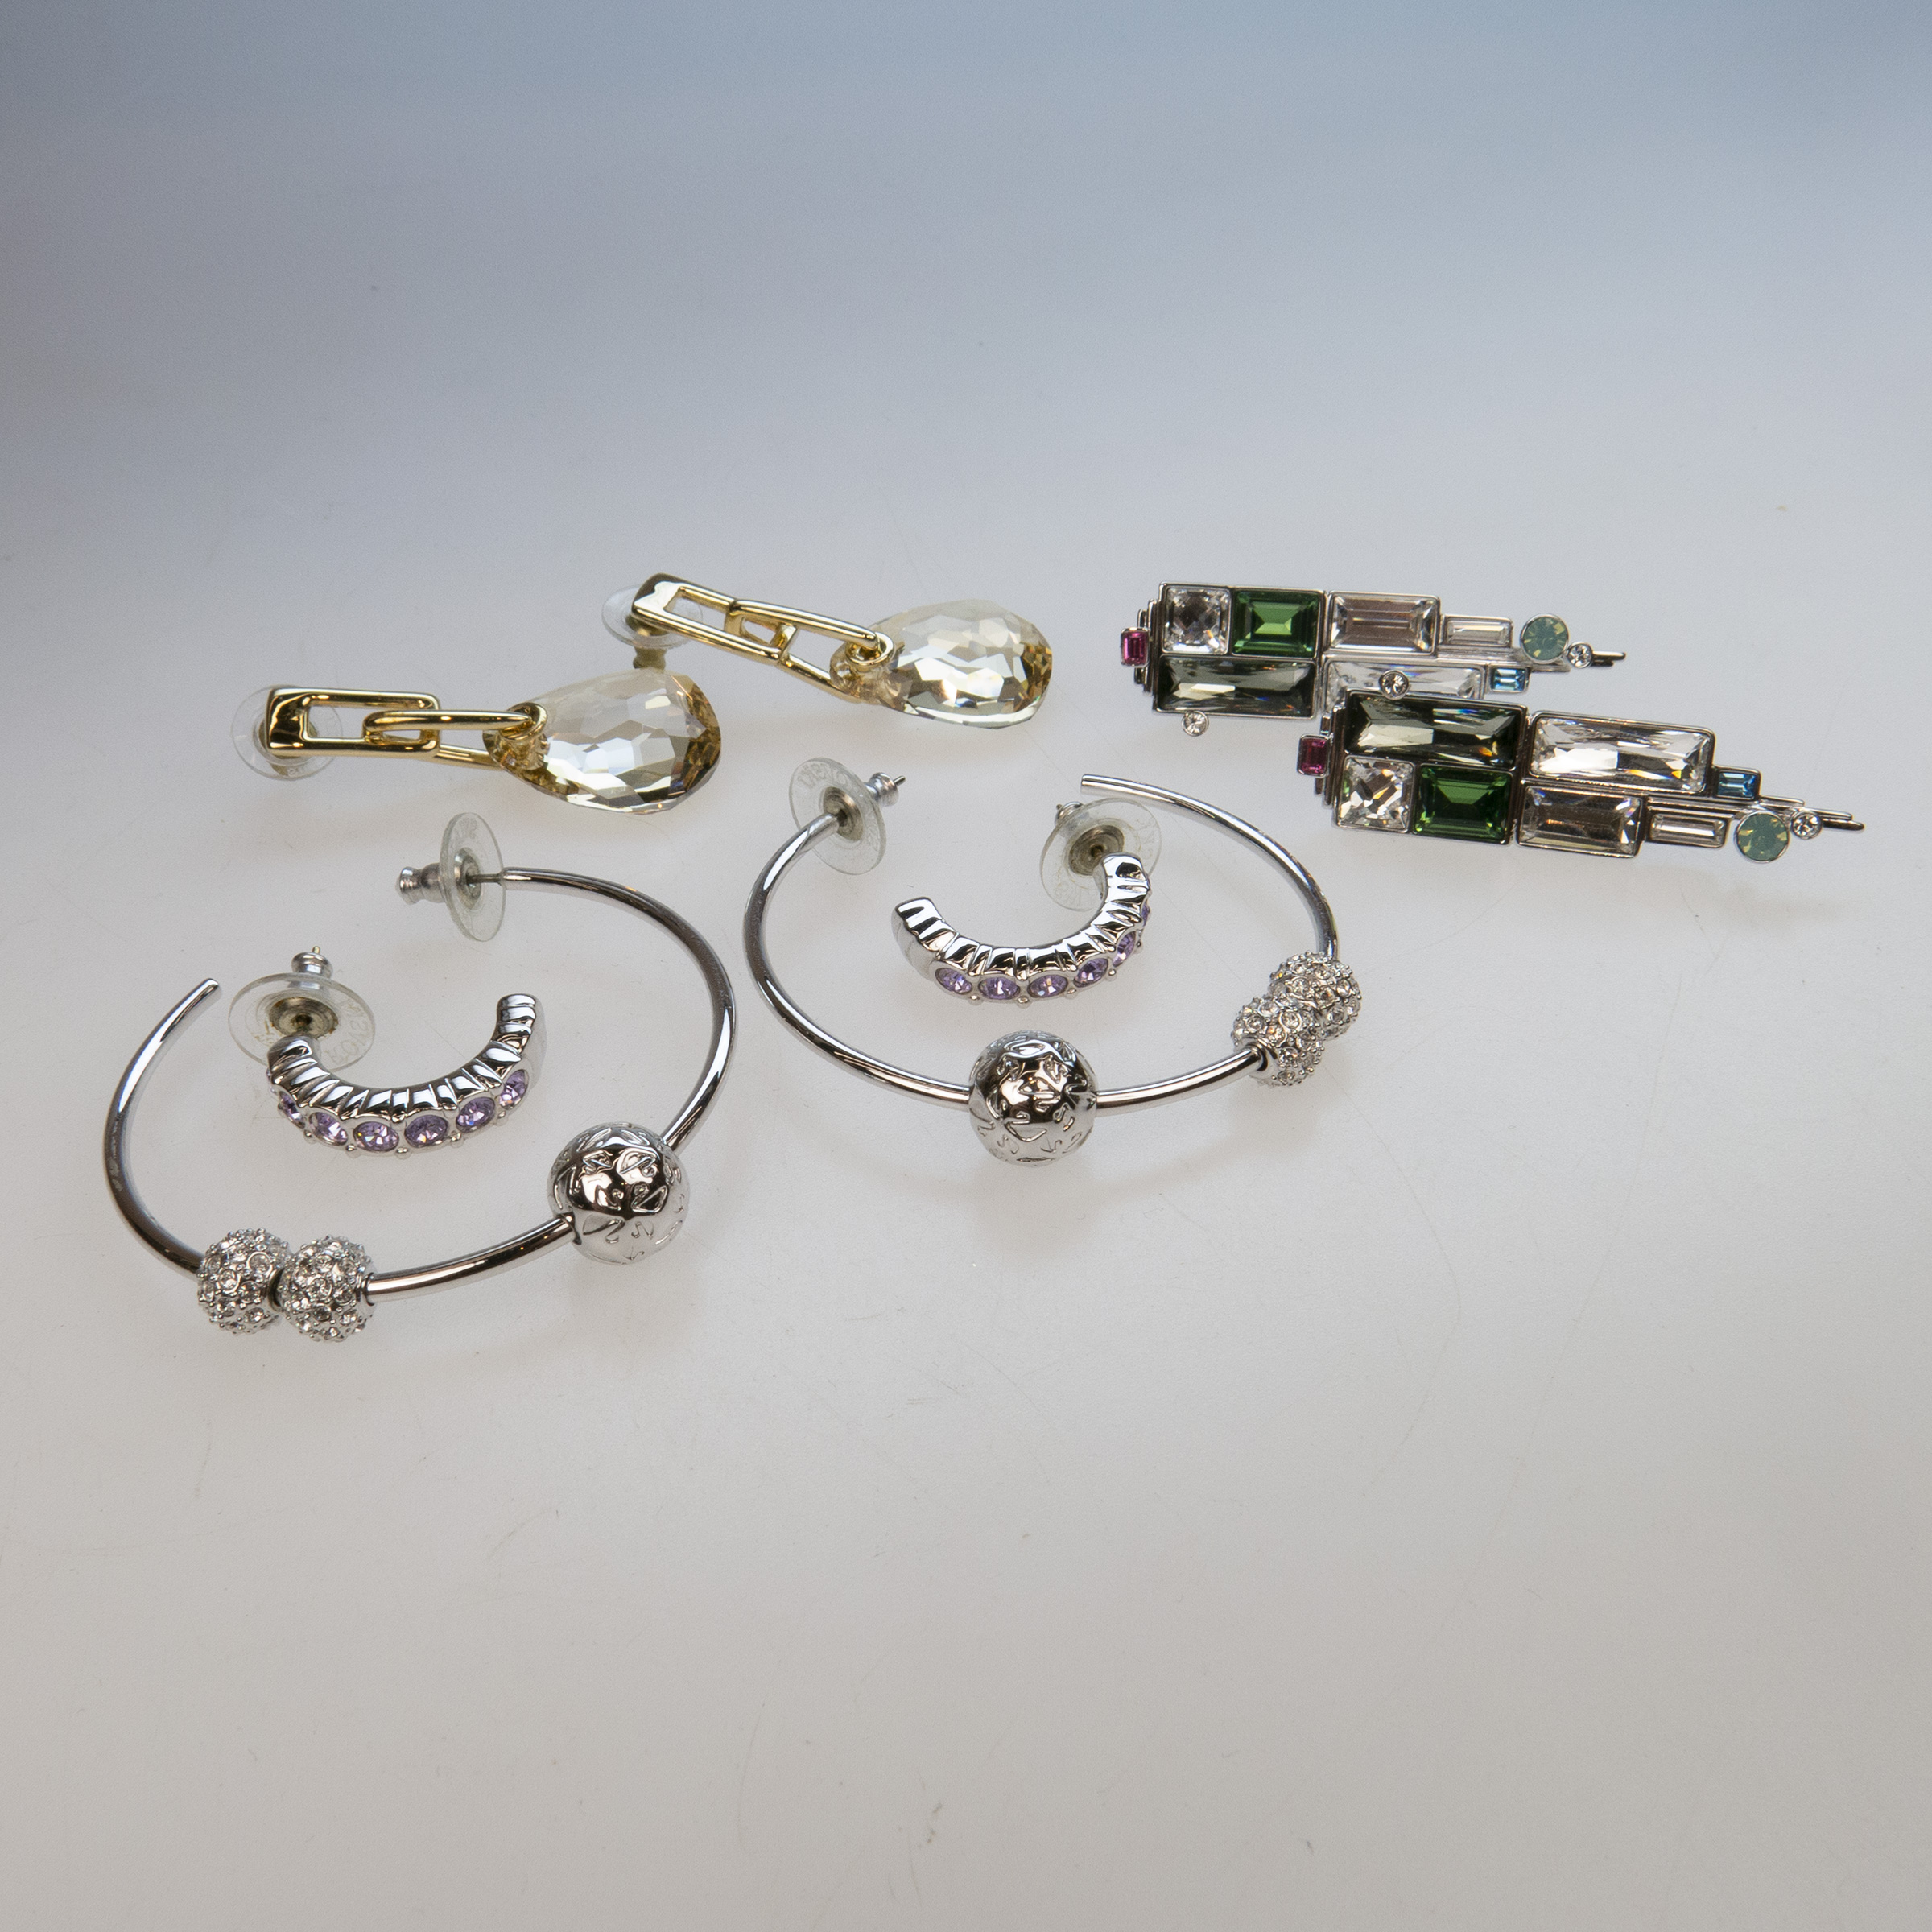 Two Swarovski Resin Bangles And Four Pairs Of Swarovski Metal And Rhinestone Earrings